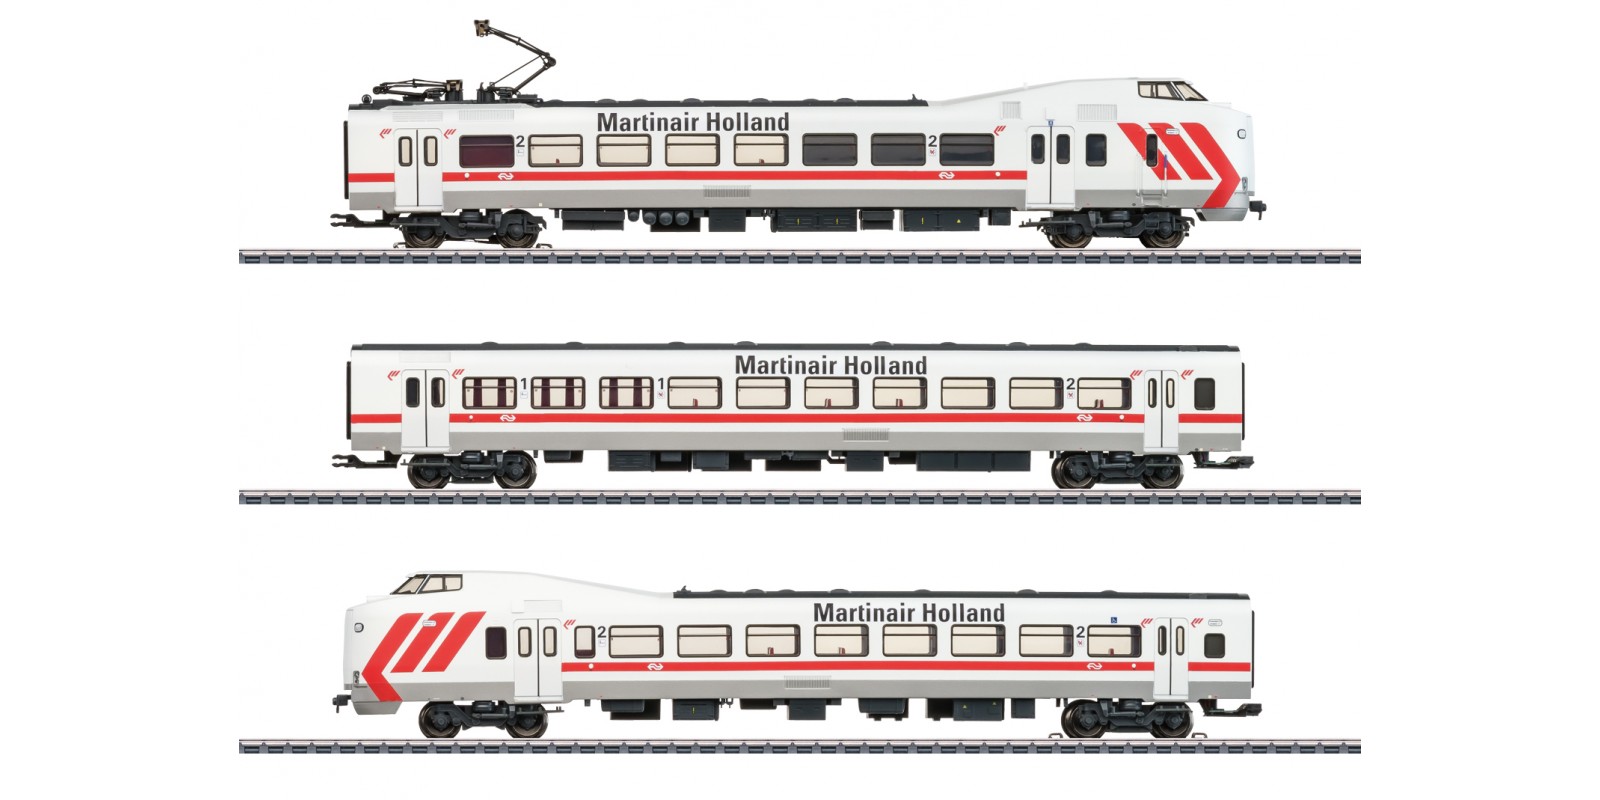 39426 Class ICM-1 Koploper Electric Rail Car Train